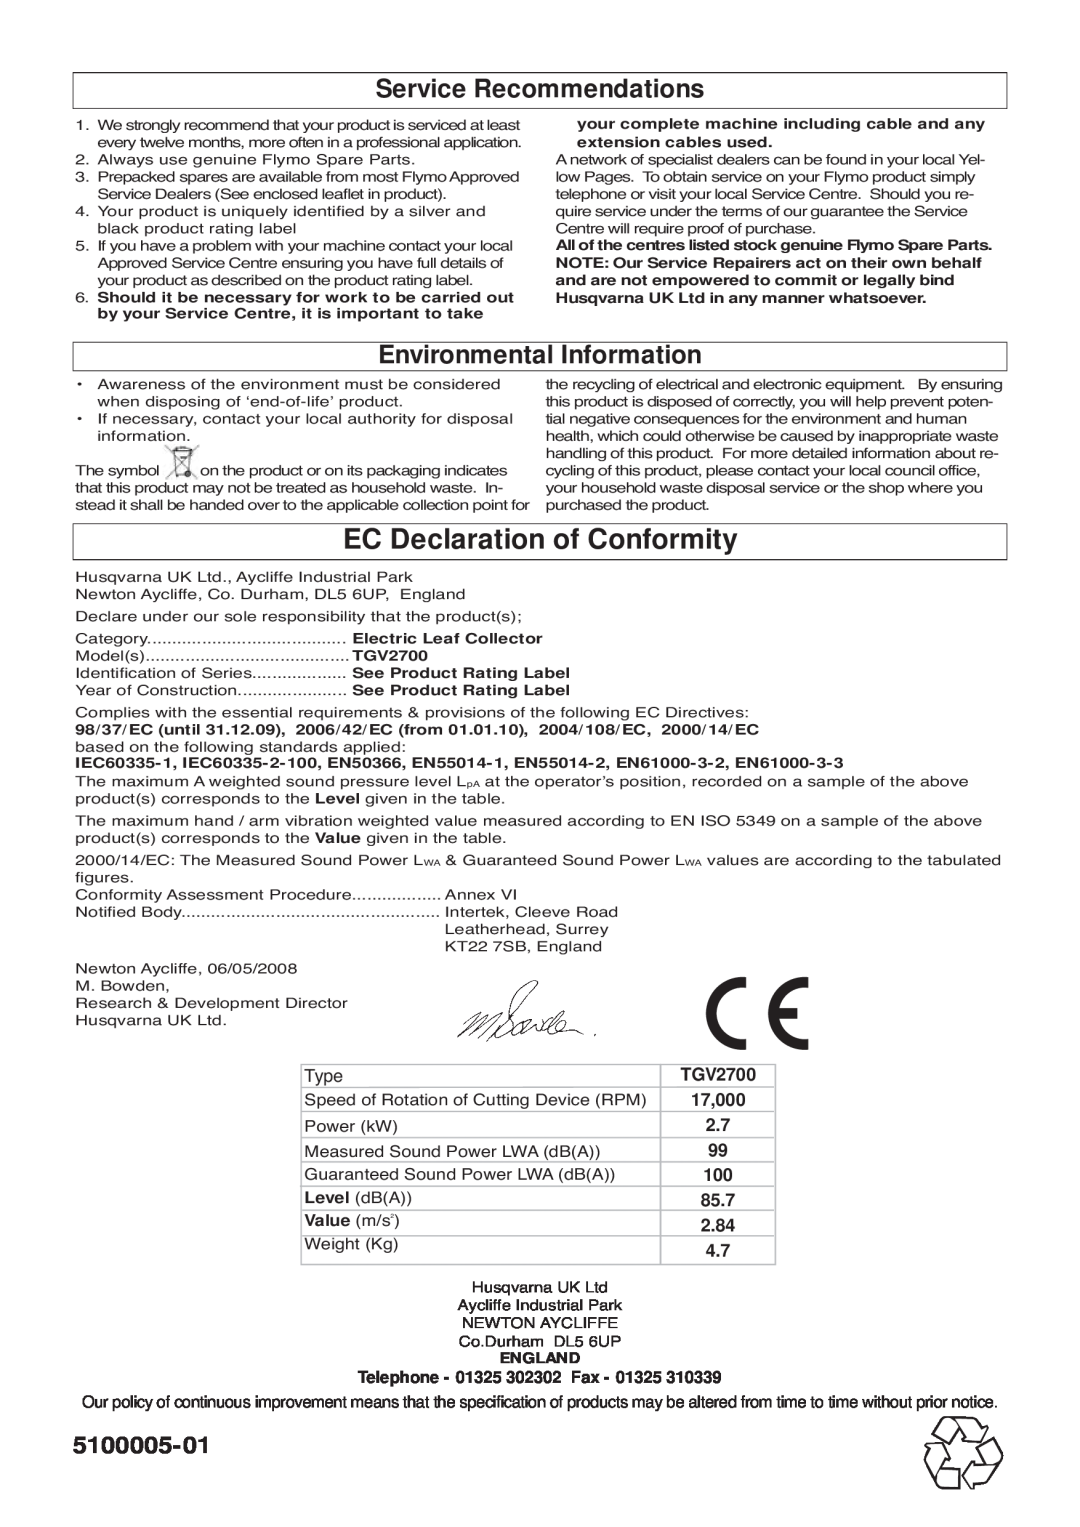 Flymo 2700XV EC Declaration of Conformity, Service Recommendations, Environmental Information, 5100005-01, Type, TGV2700 